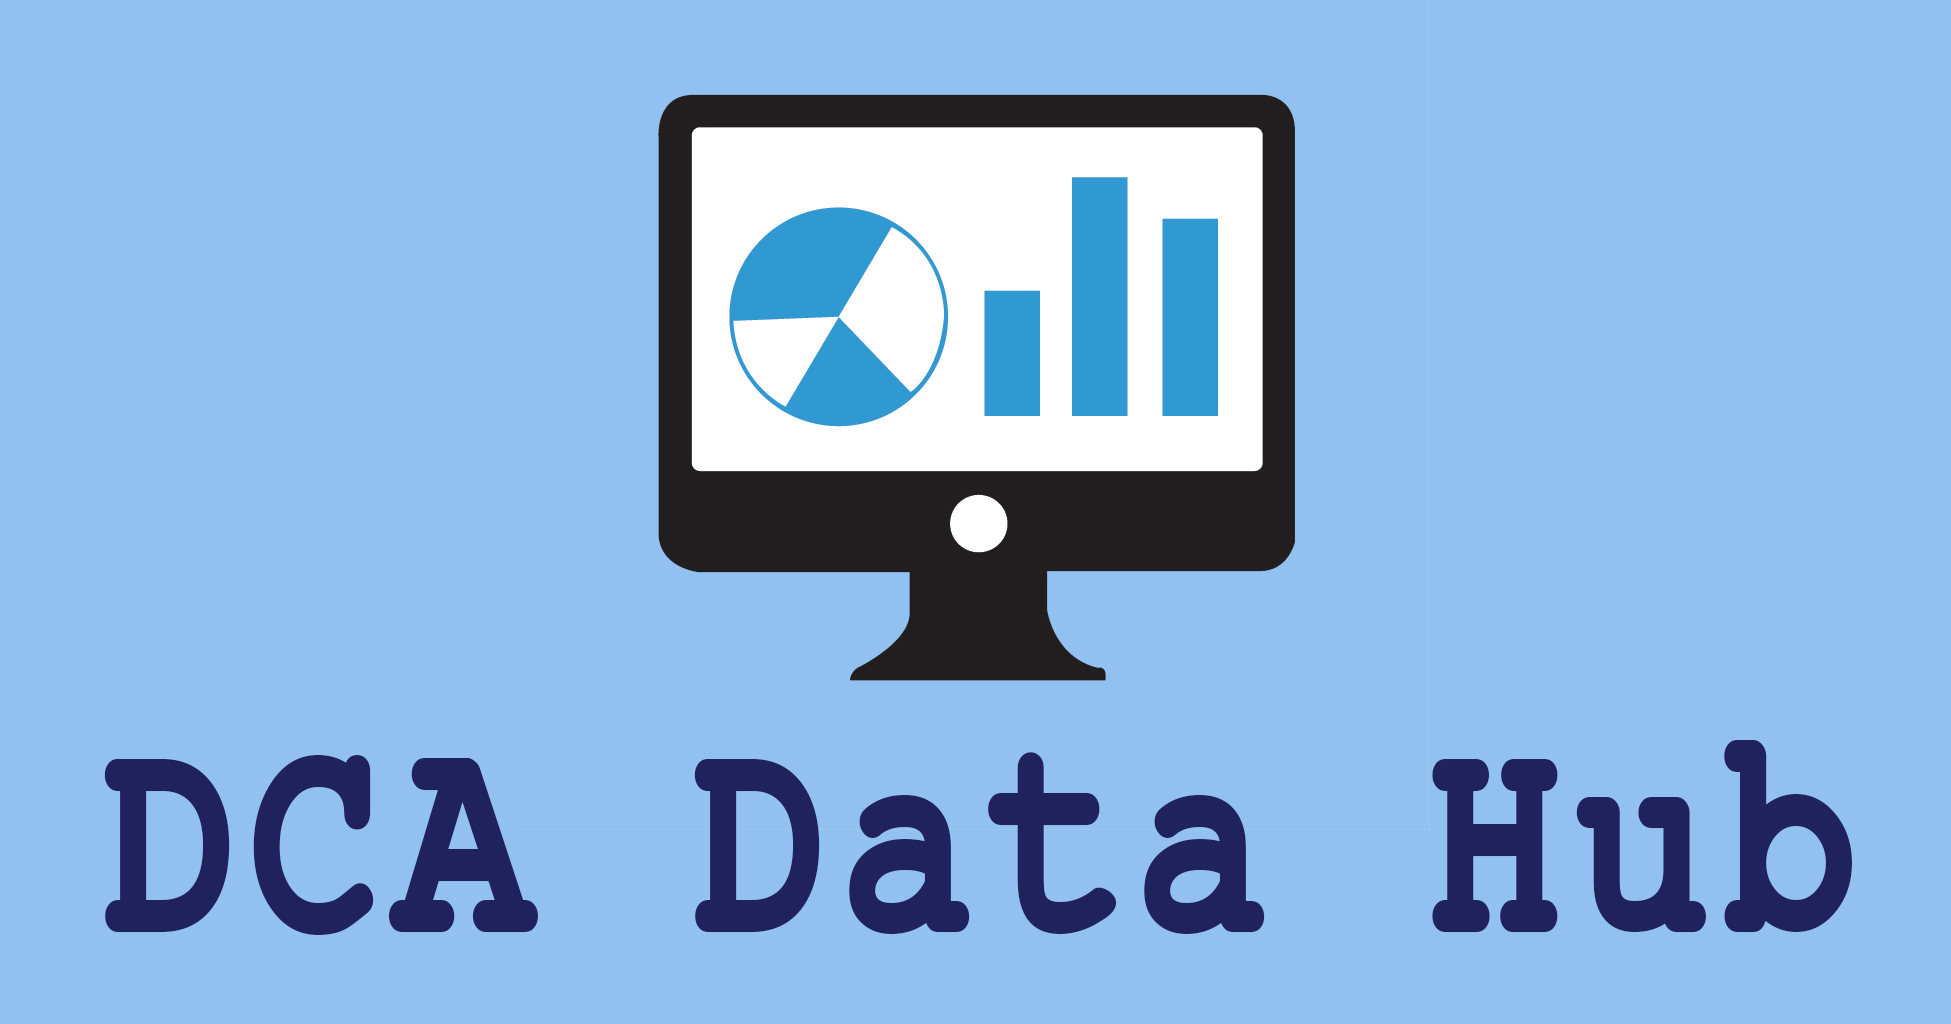 DCA Data hub graphic